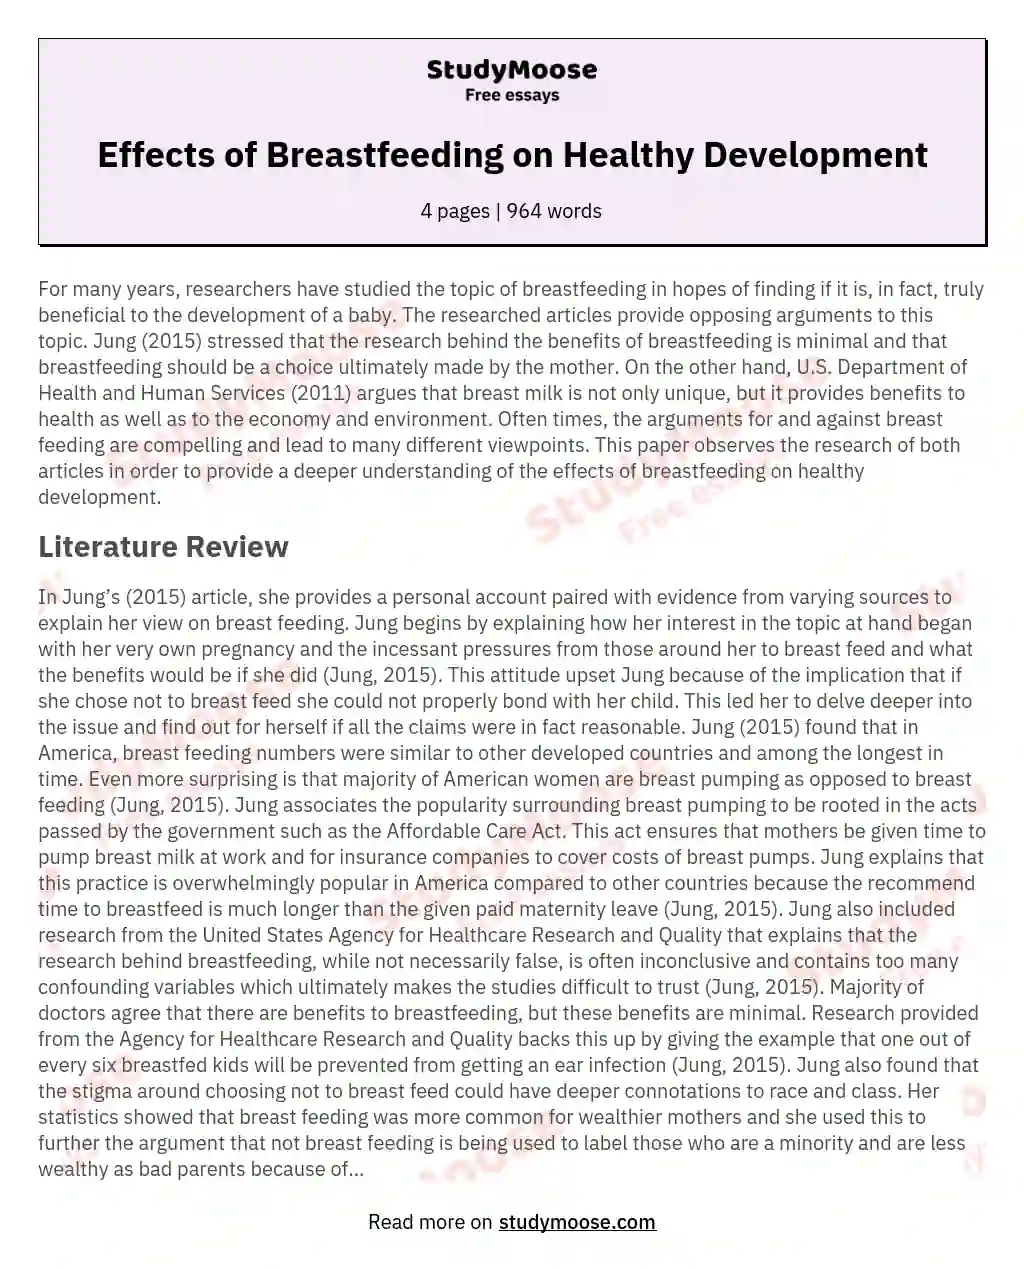 Effects of Breastfeeding on Healthy Development essay